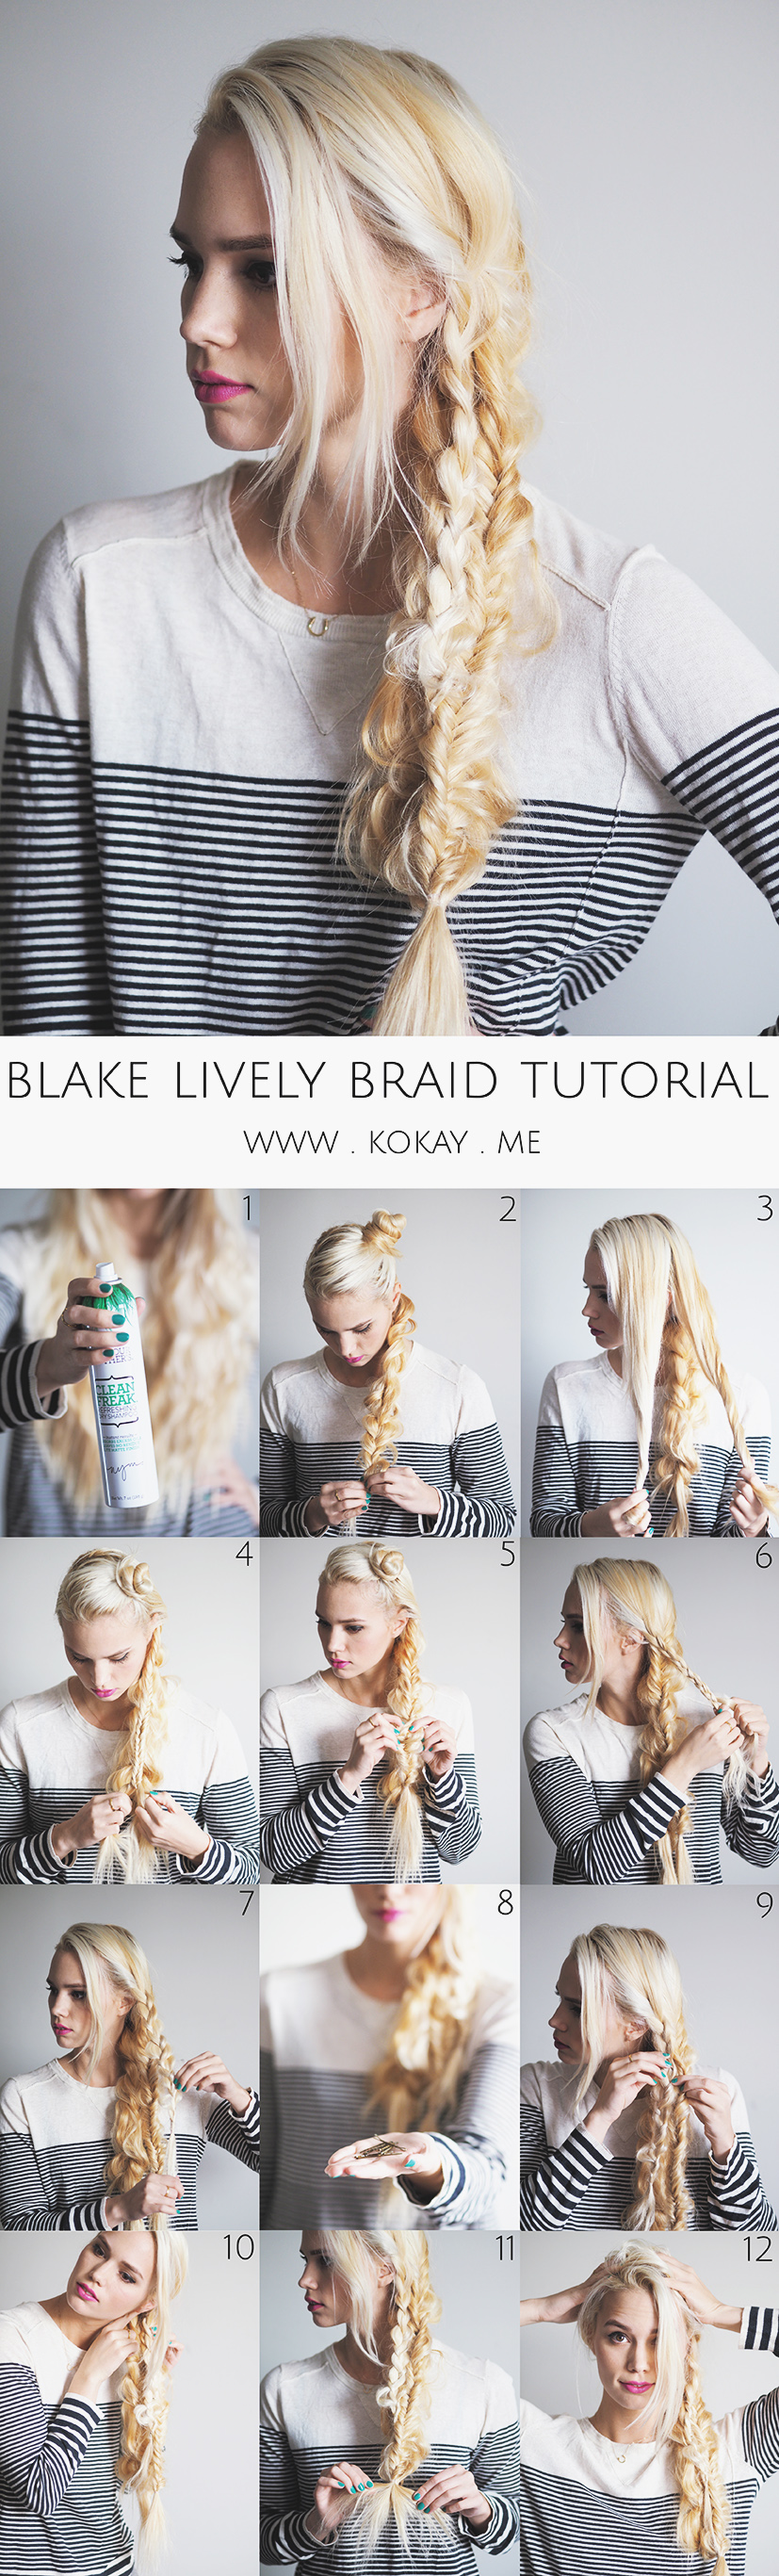 How to: DIY Blake Lively Braid Tutorial